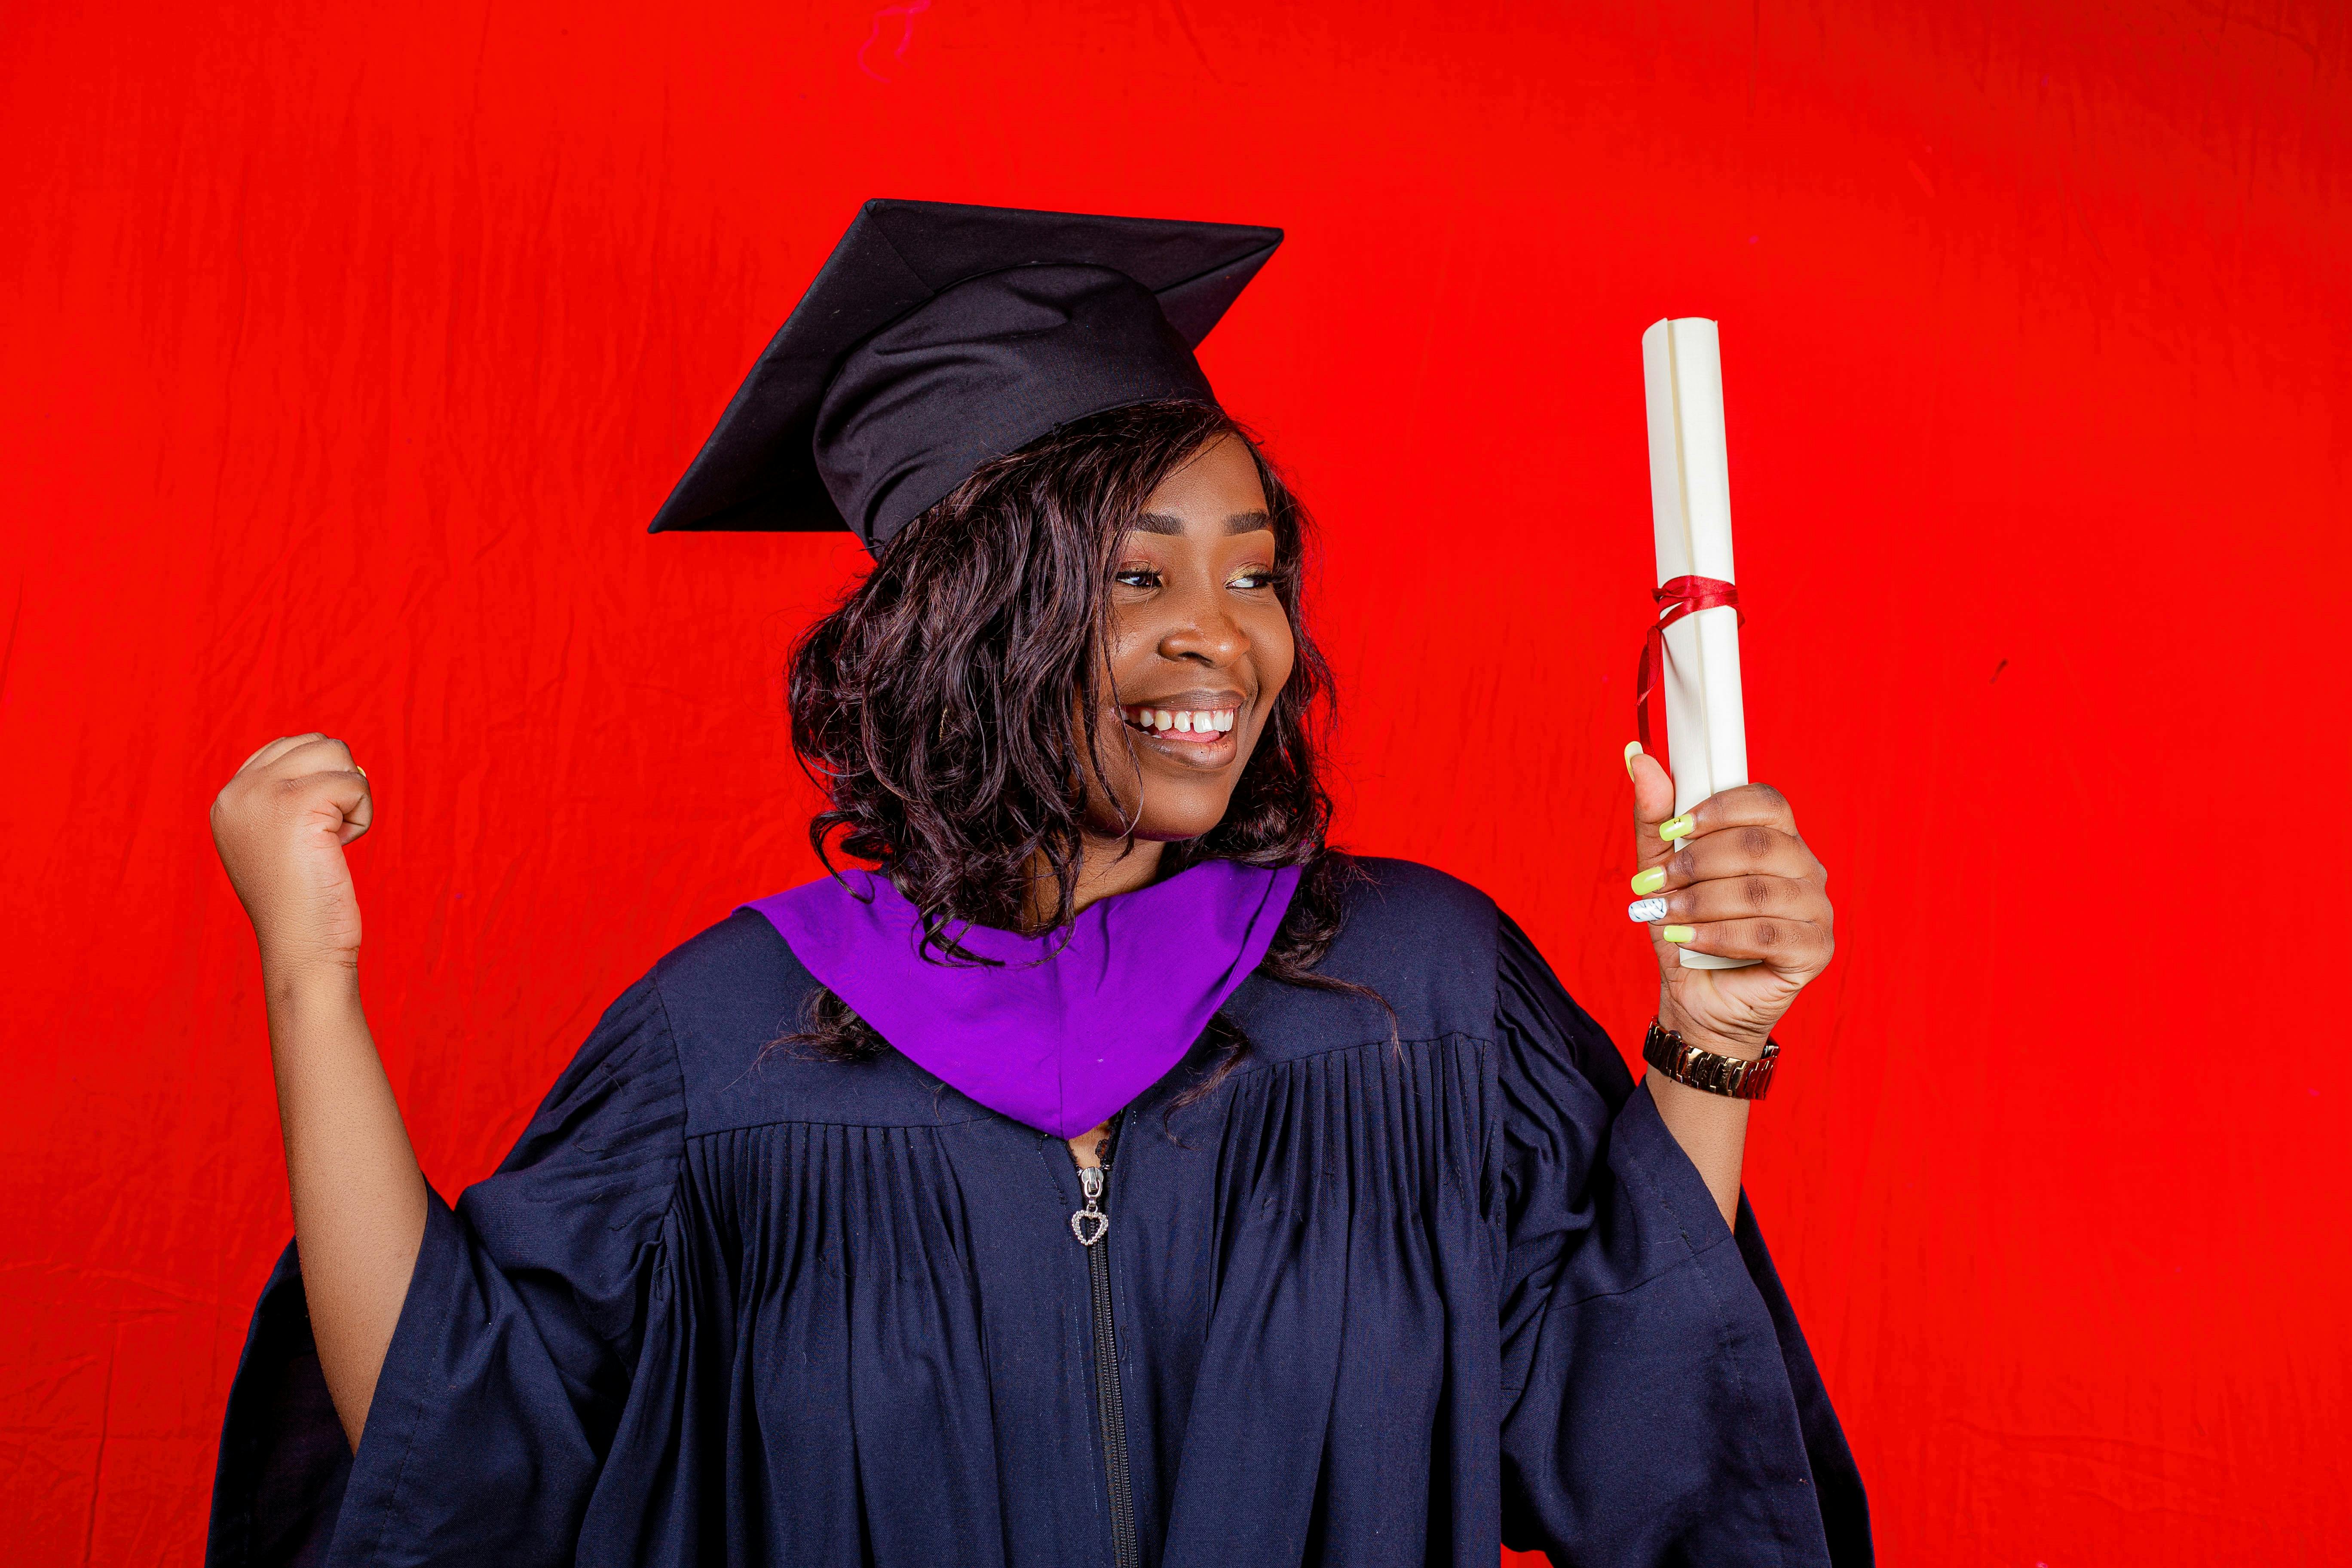 Matte Red Graduation Cap, Gown & Tassel Set|Vocational